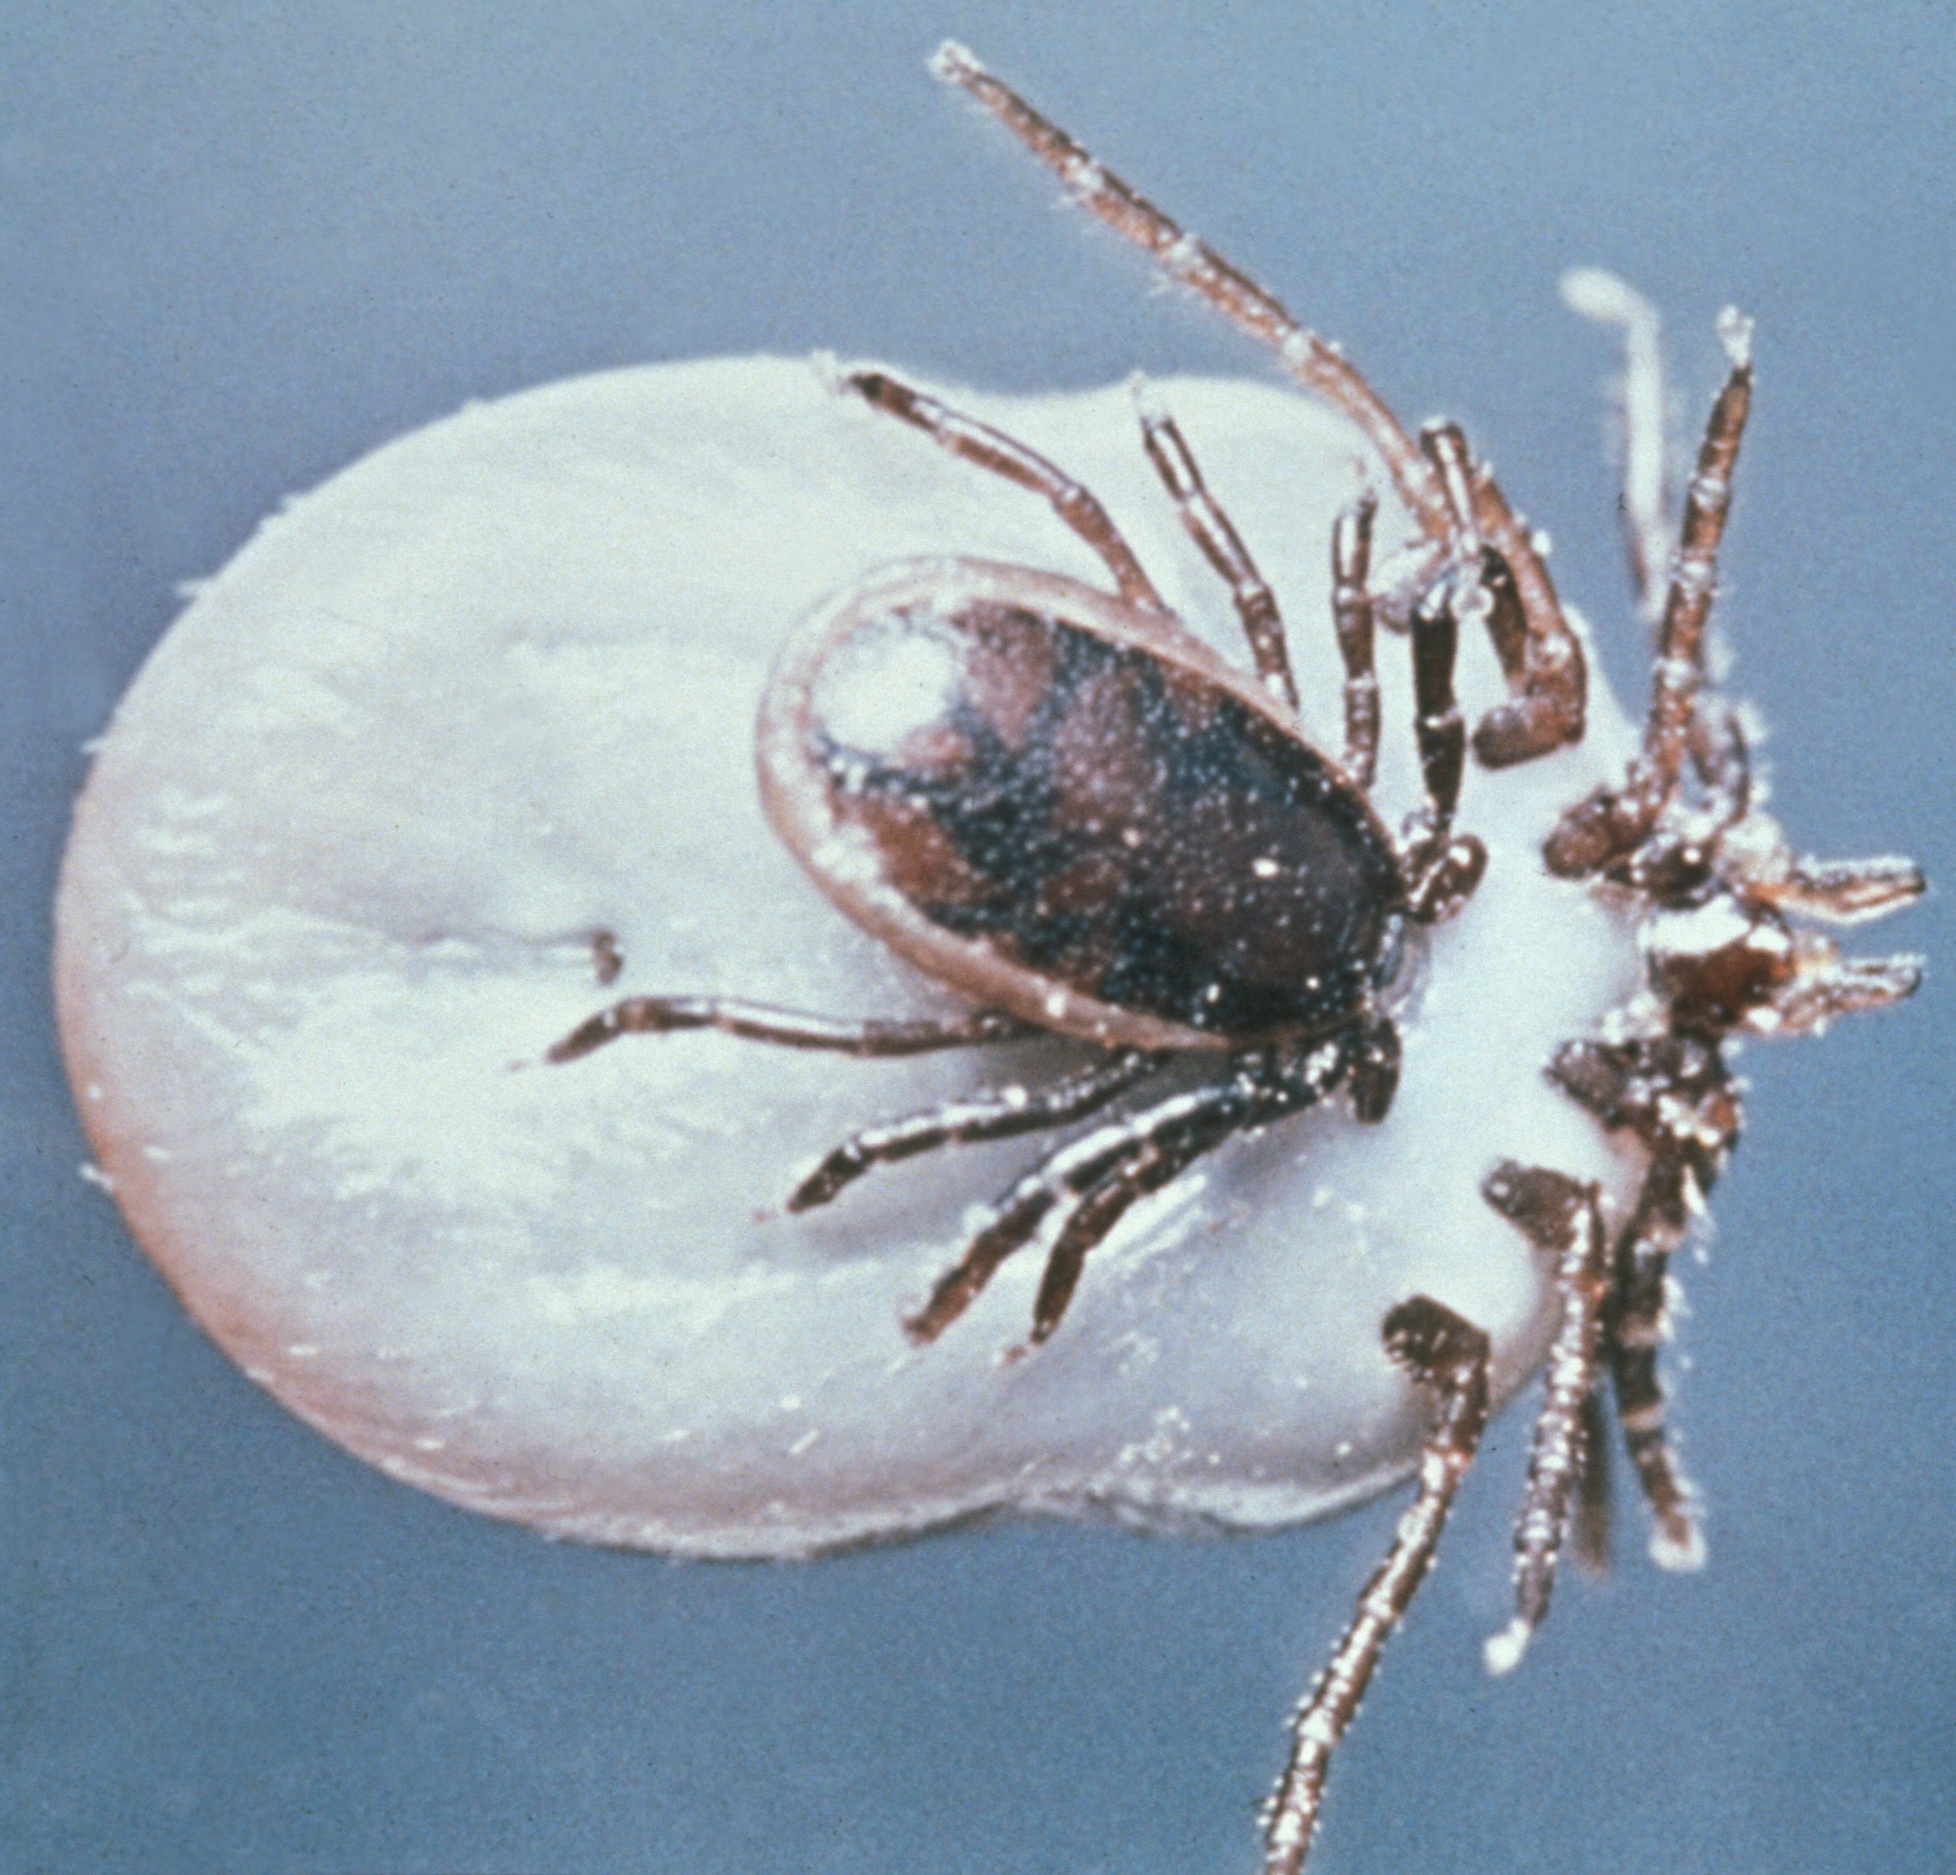 ticks copulating, find a lyme disease doctor